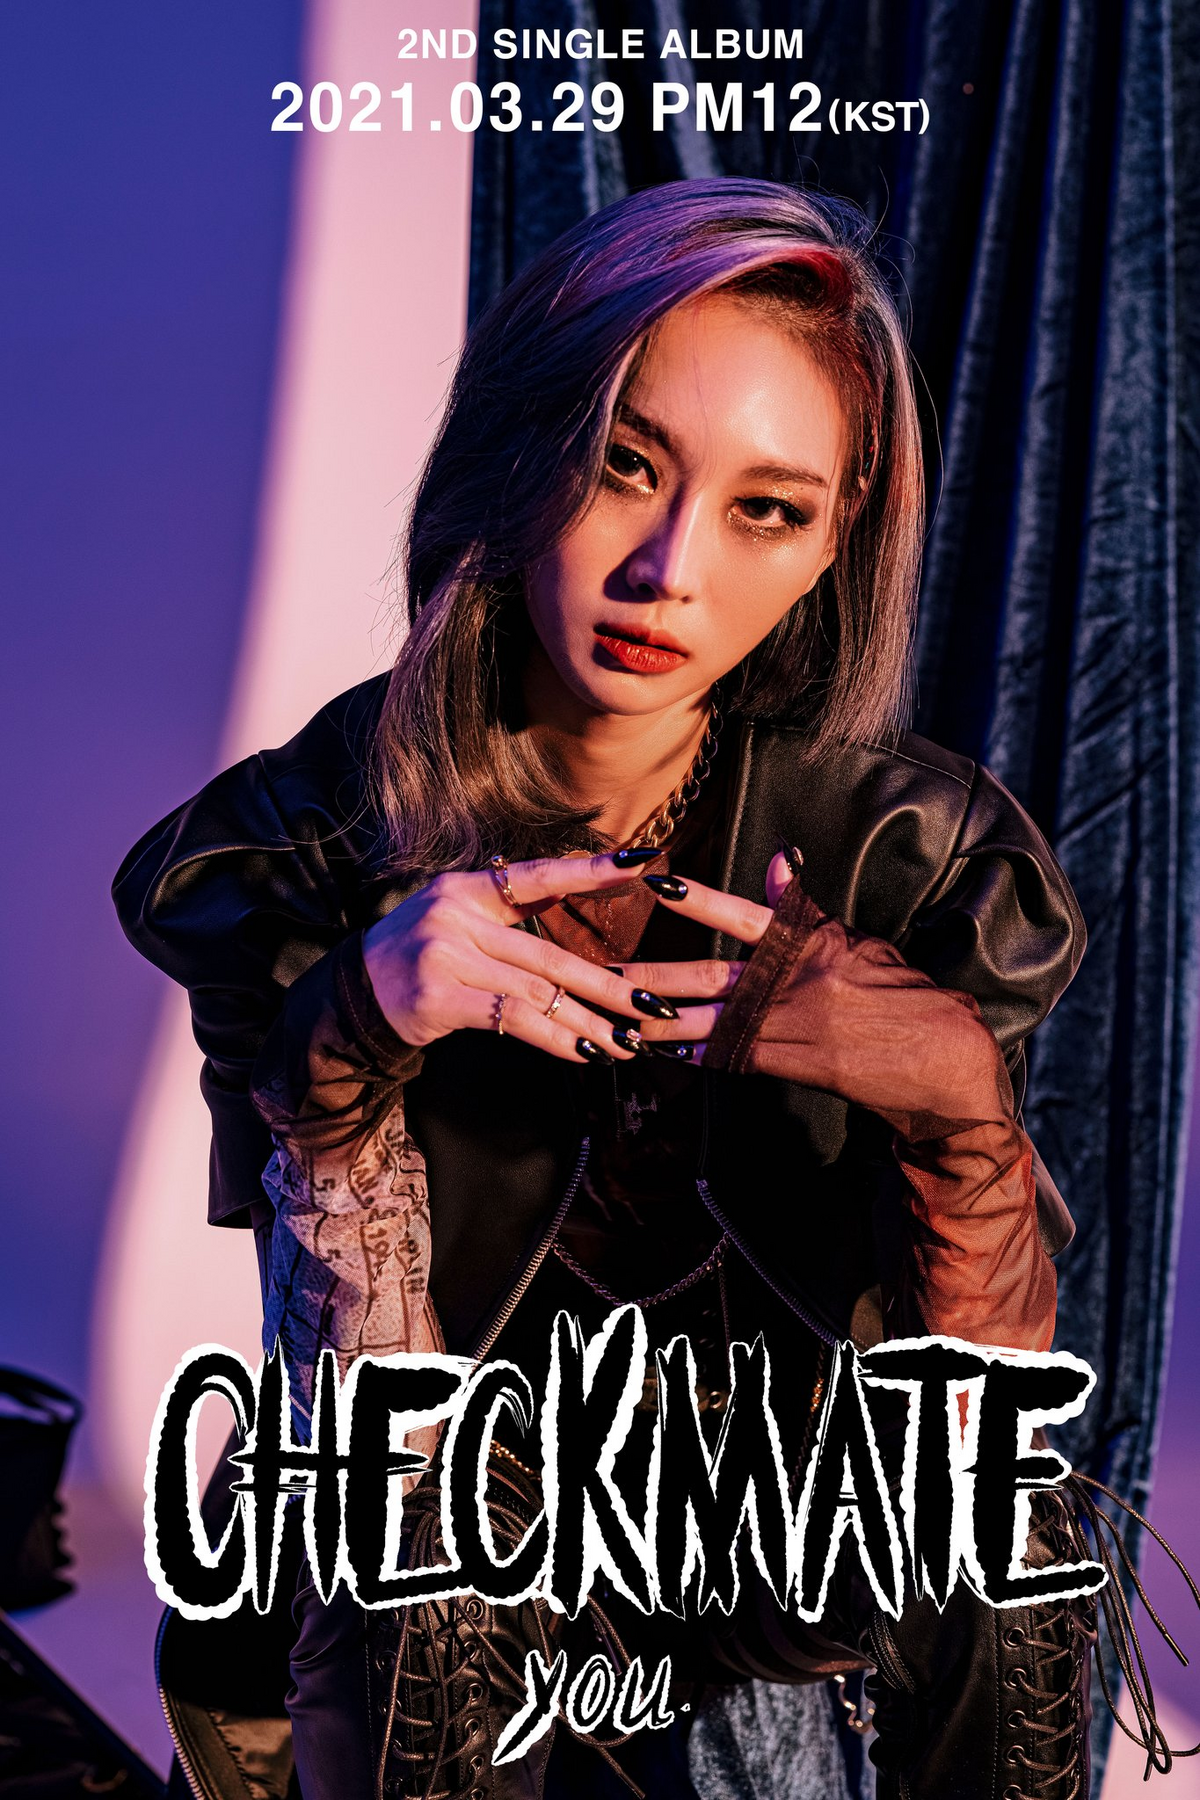 CHECKMATE - Drum (Sieun, Yongseok & Suri - Concept Teasers) : r/kpop